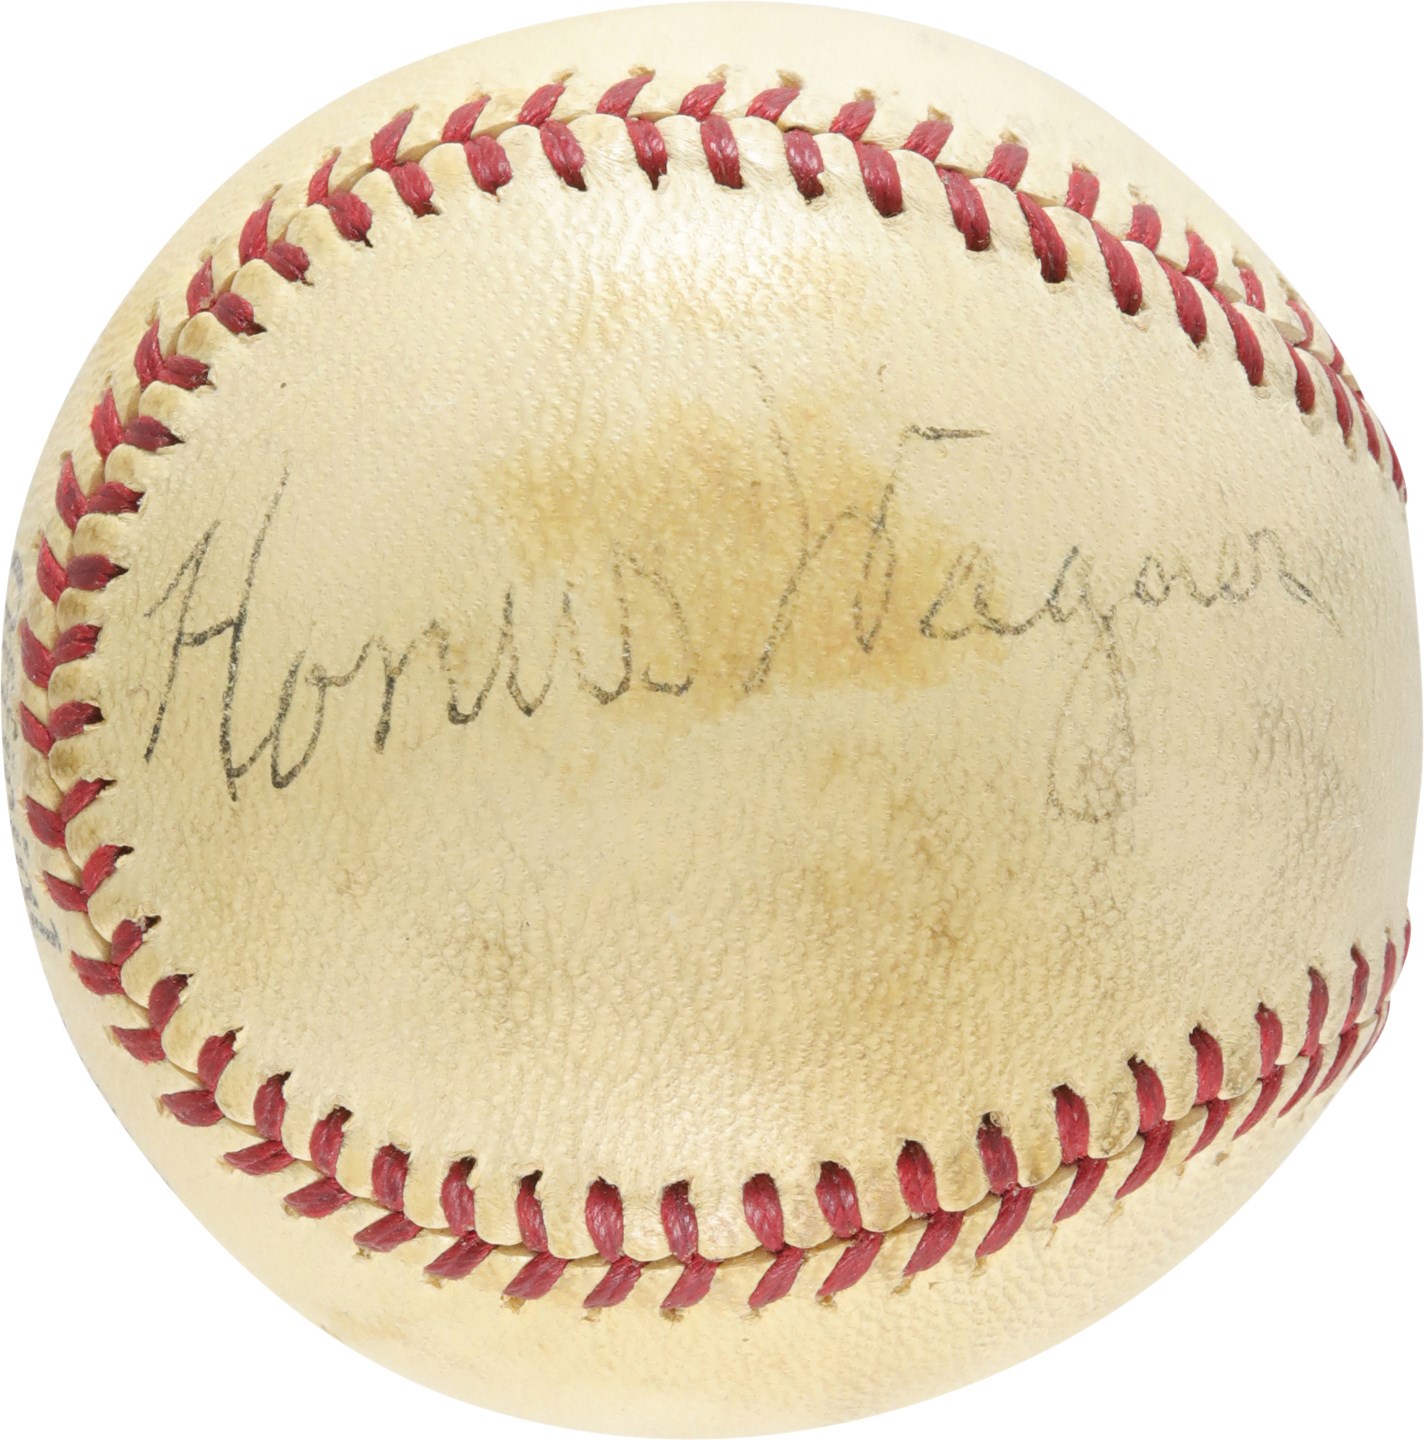 Baseball Autographs - Honus Wagner Single-Signed Baseball (PSA)